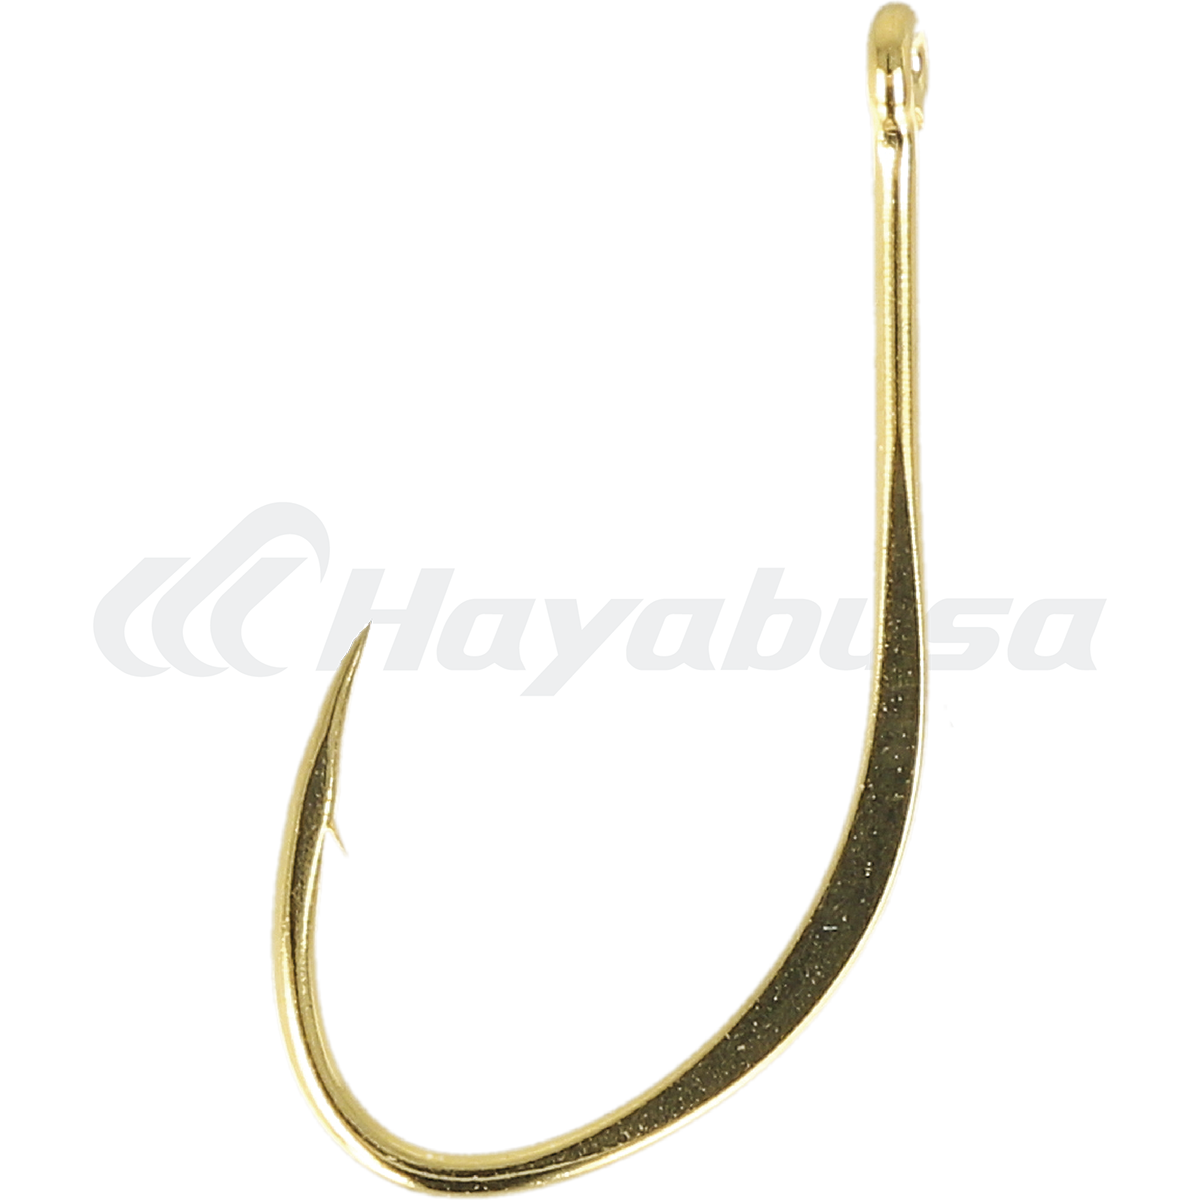 Крючок Hayabusa H.KAJ290